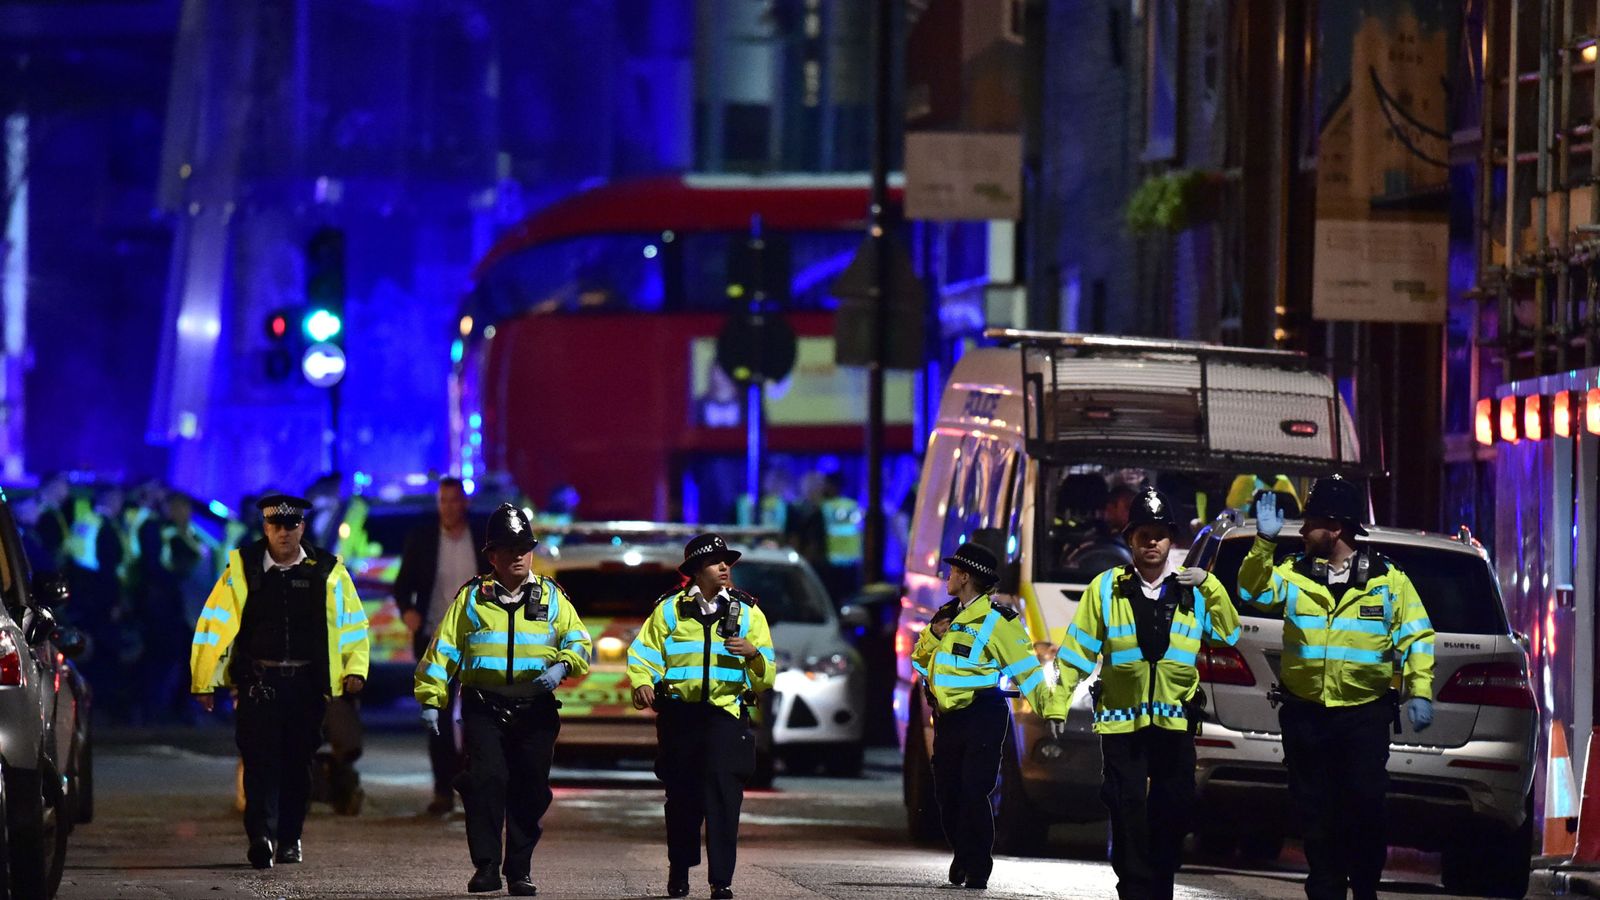 London Bridge Inquests Pubgoer Hit In Police Crossfire Uk News Sky News 